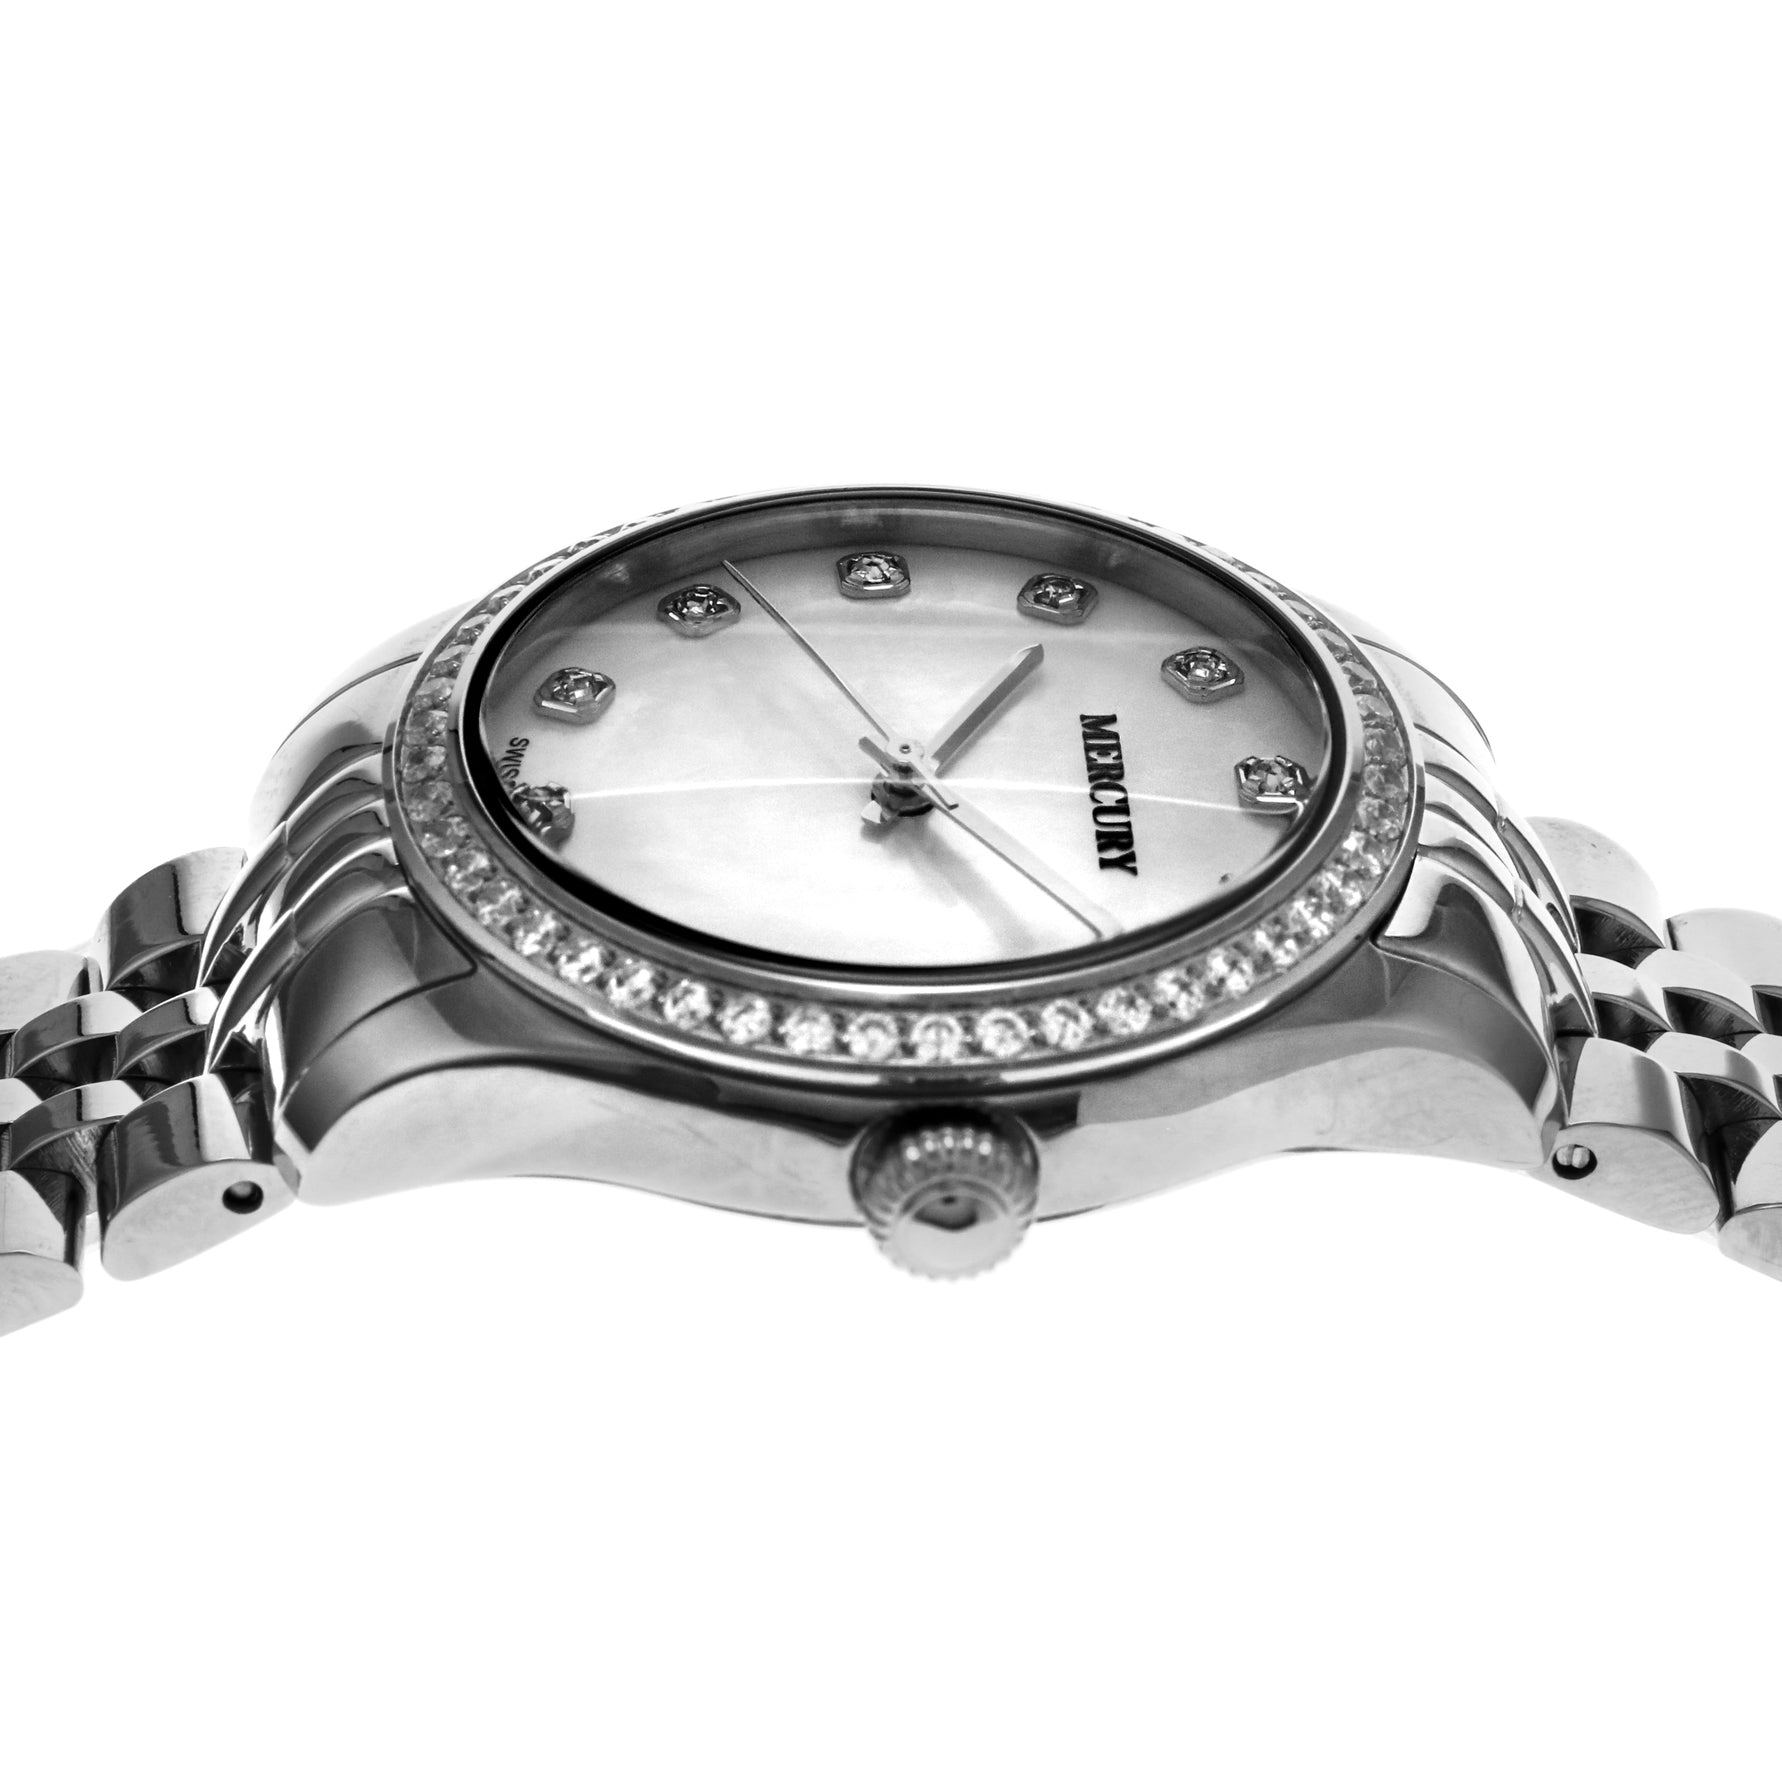 Mercury Women's Swiss Quartz Watch with Pearly White Dial - MER-0027